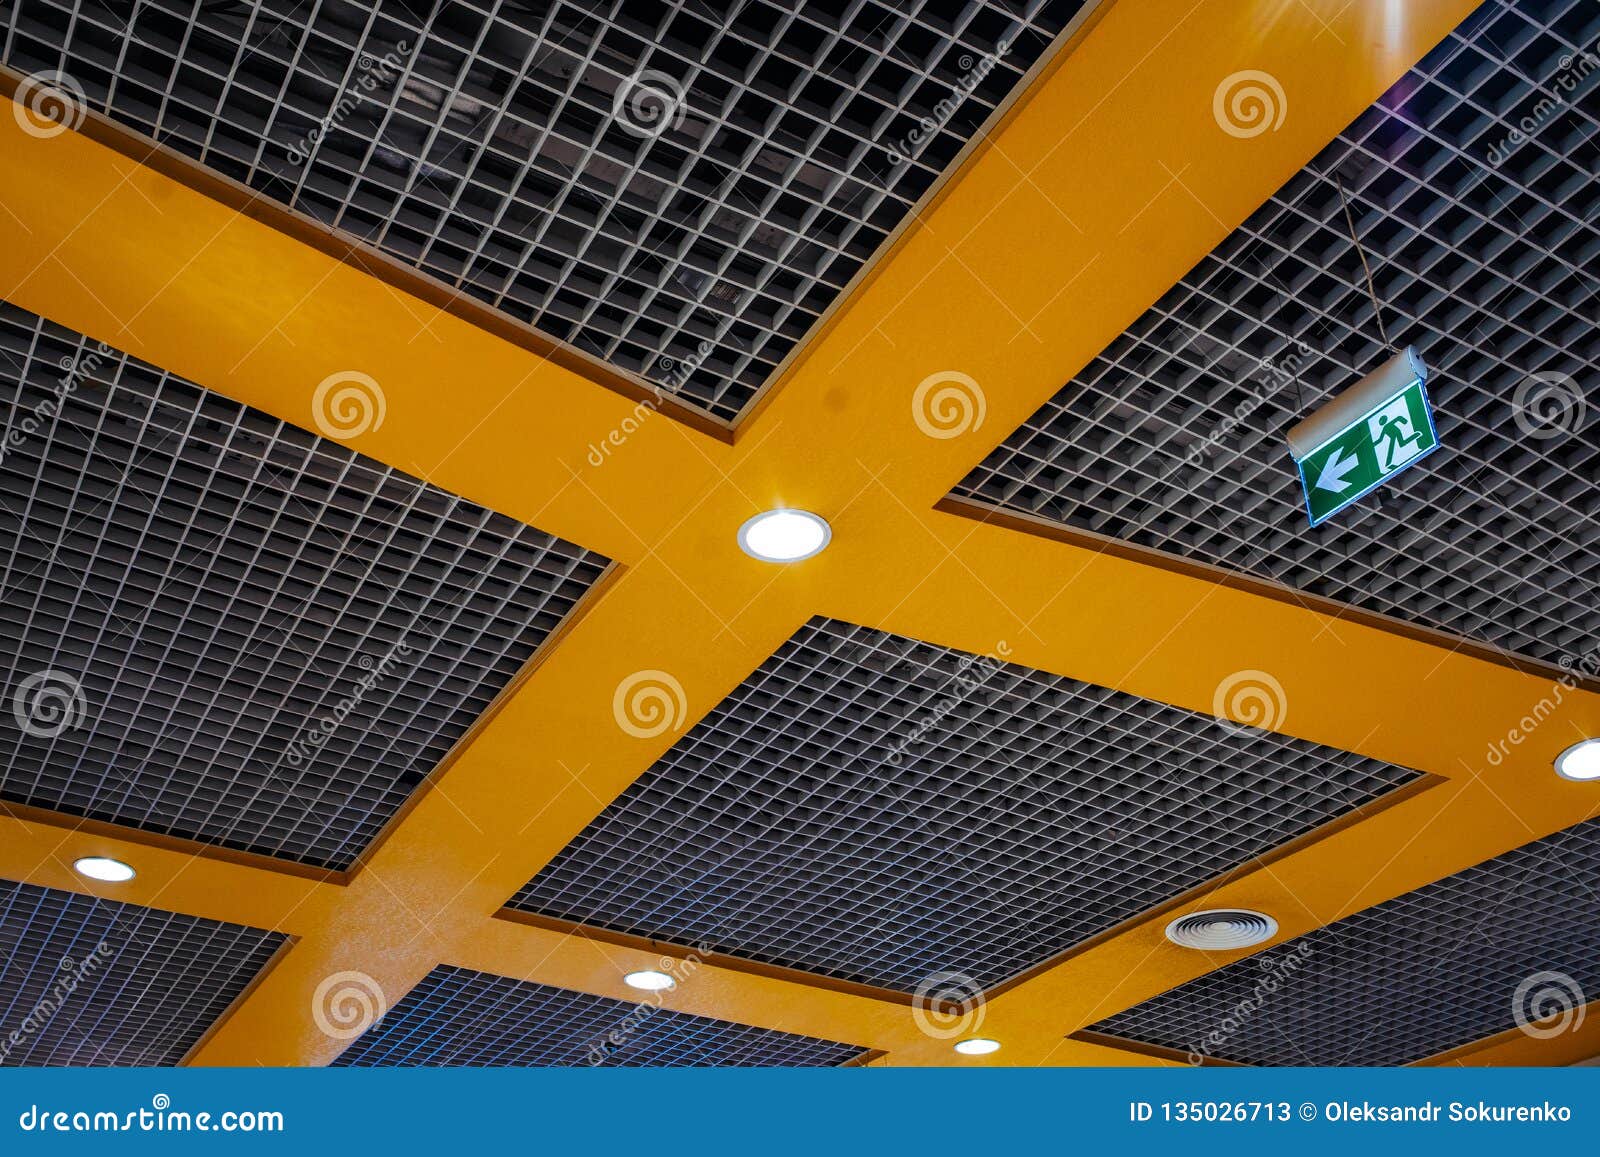 Orange Grid Structure Of Suspended Ceiling Stock Image Image Of Detail Design